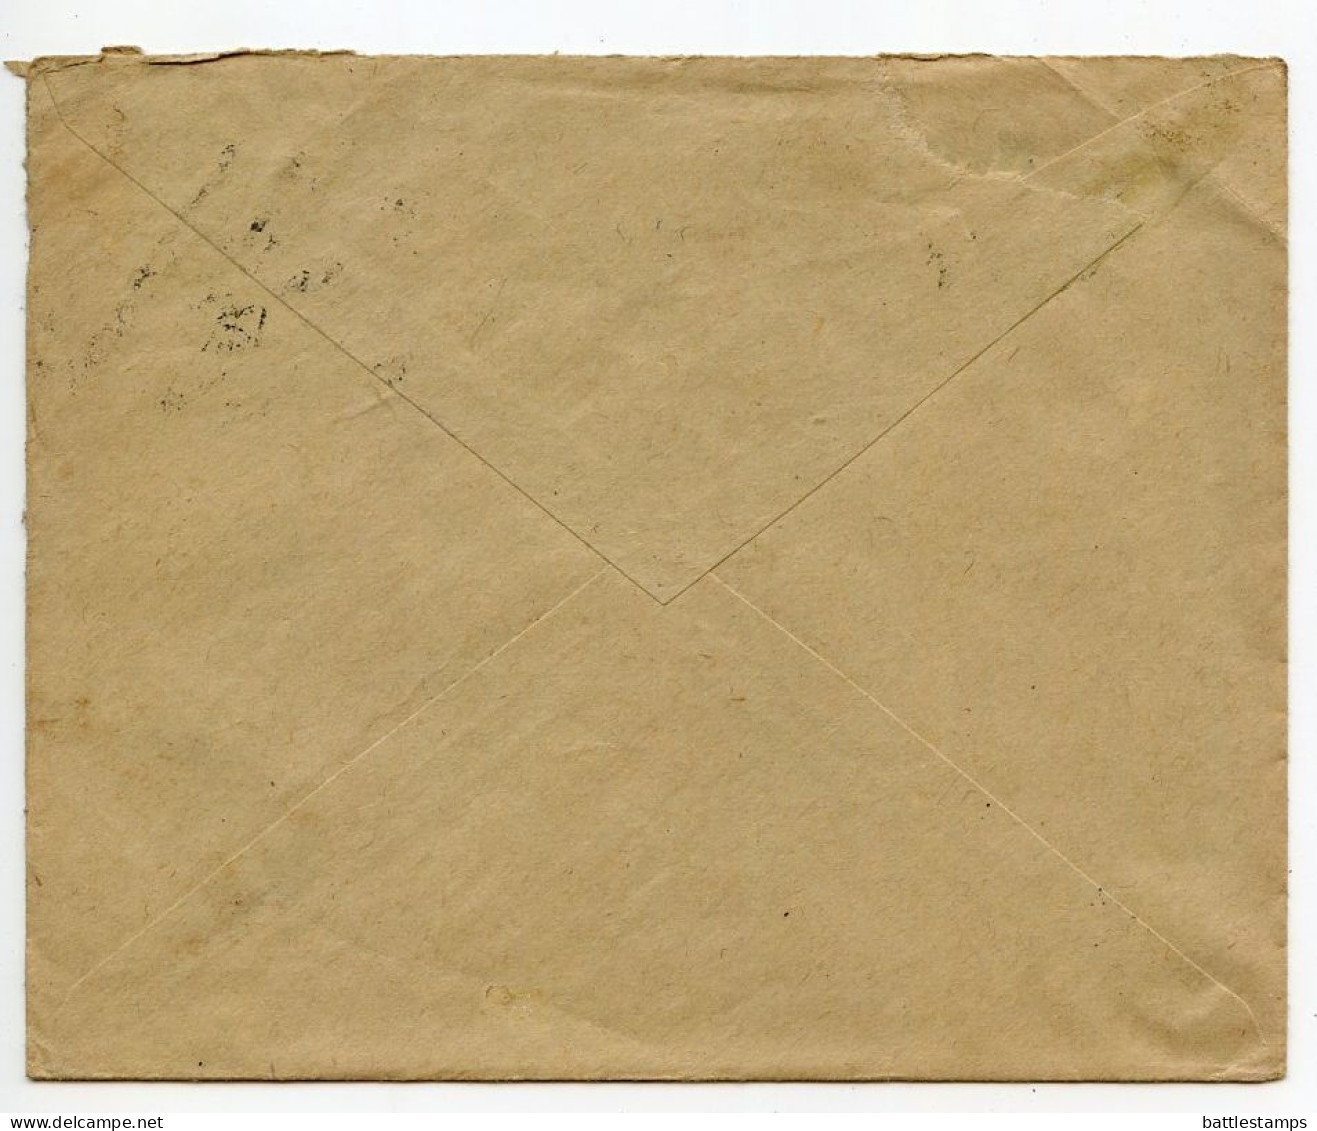 Germany 1929 Cover W/ Letter & Zahlkarte; Pockau (Flöhatal) - Kurt Neumann, Rauchwarenfärberei Und Blenderei; 15pf. Kant - Cartas & Documentos